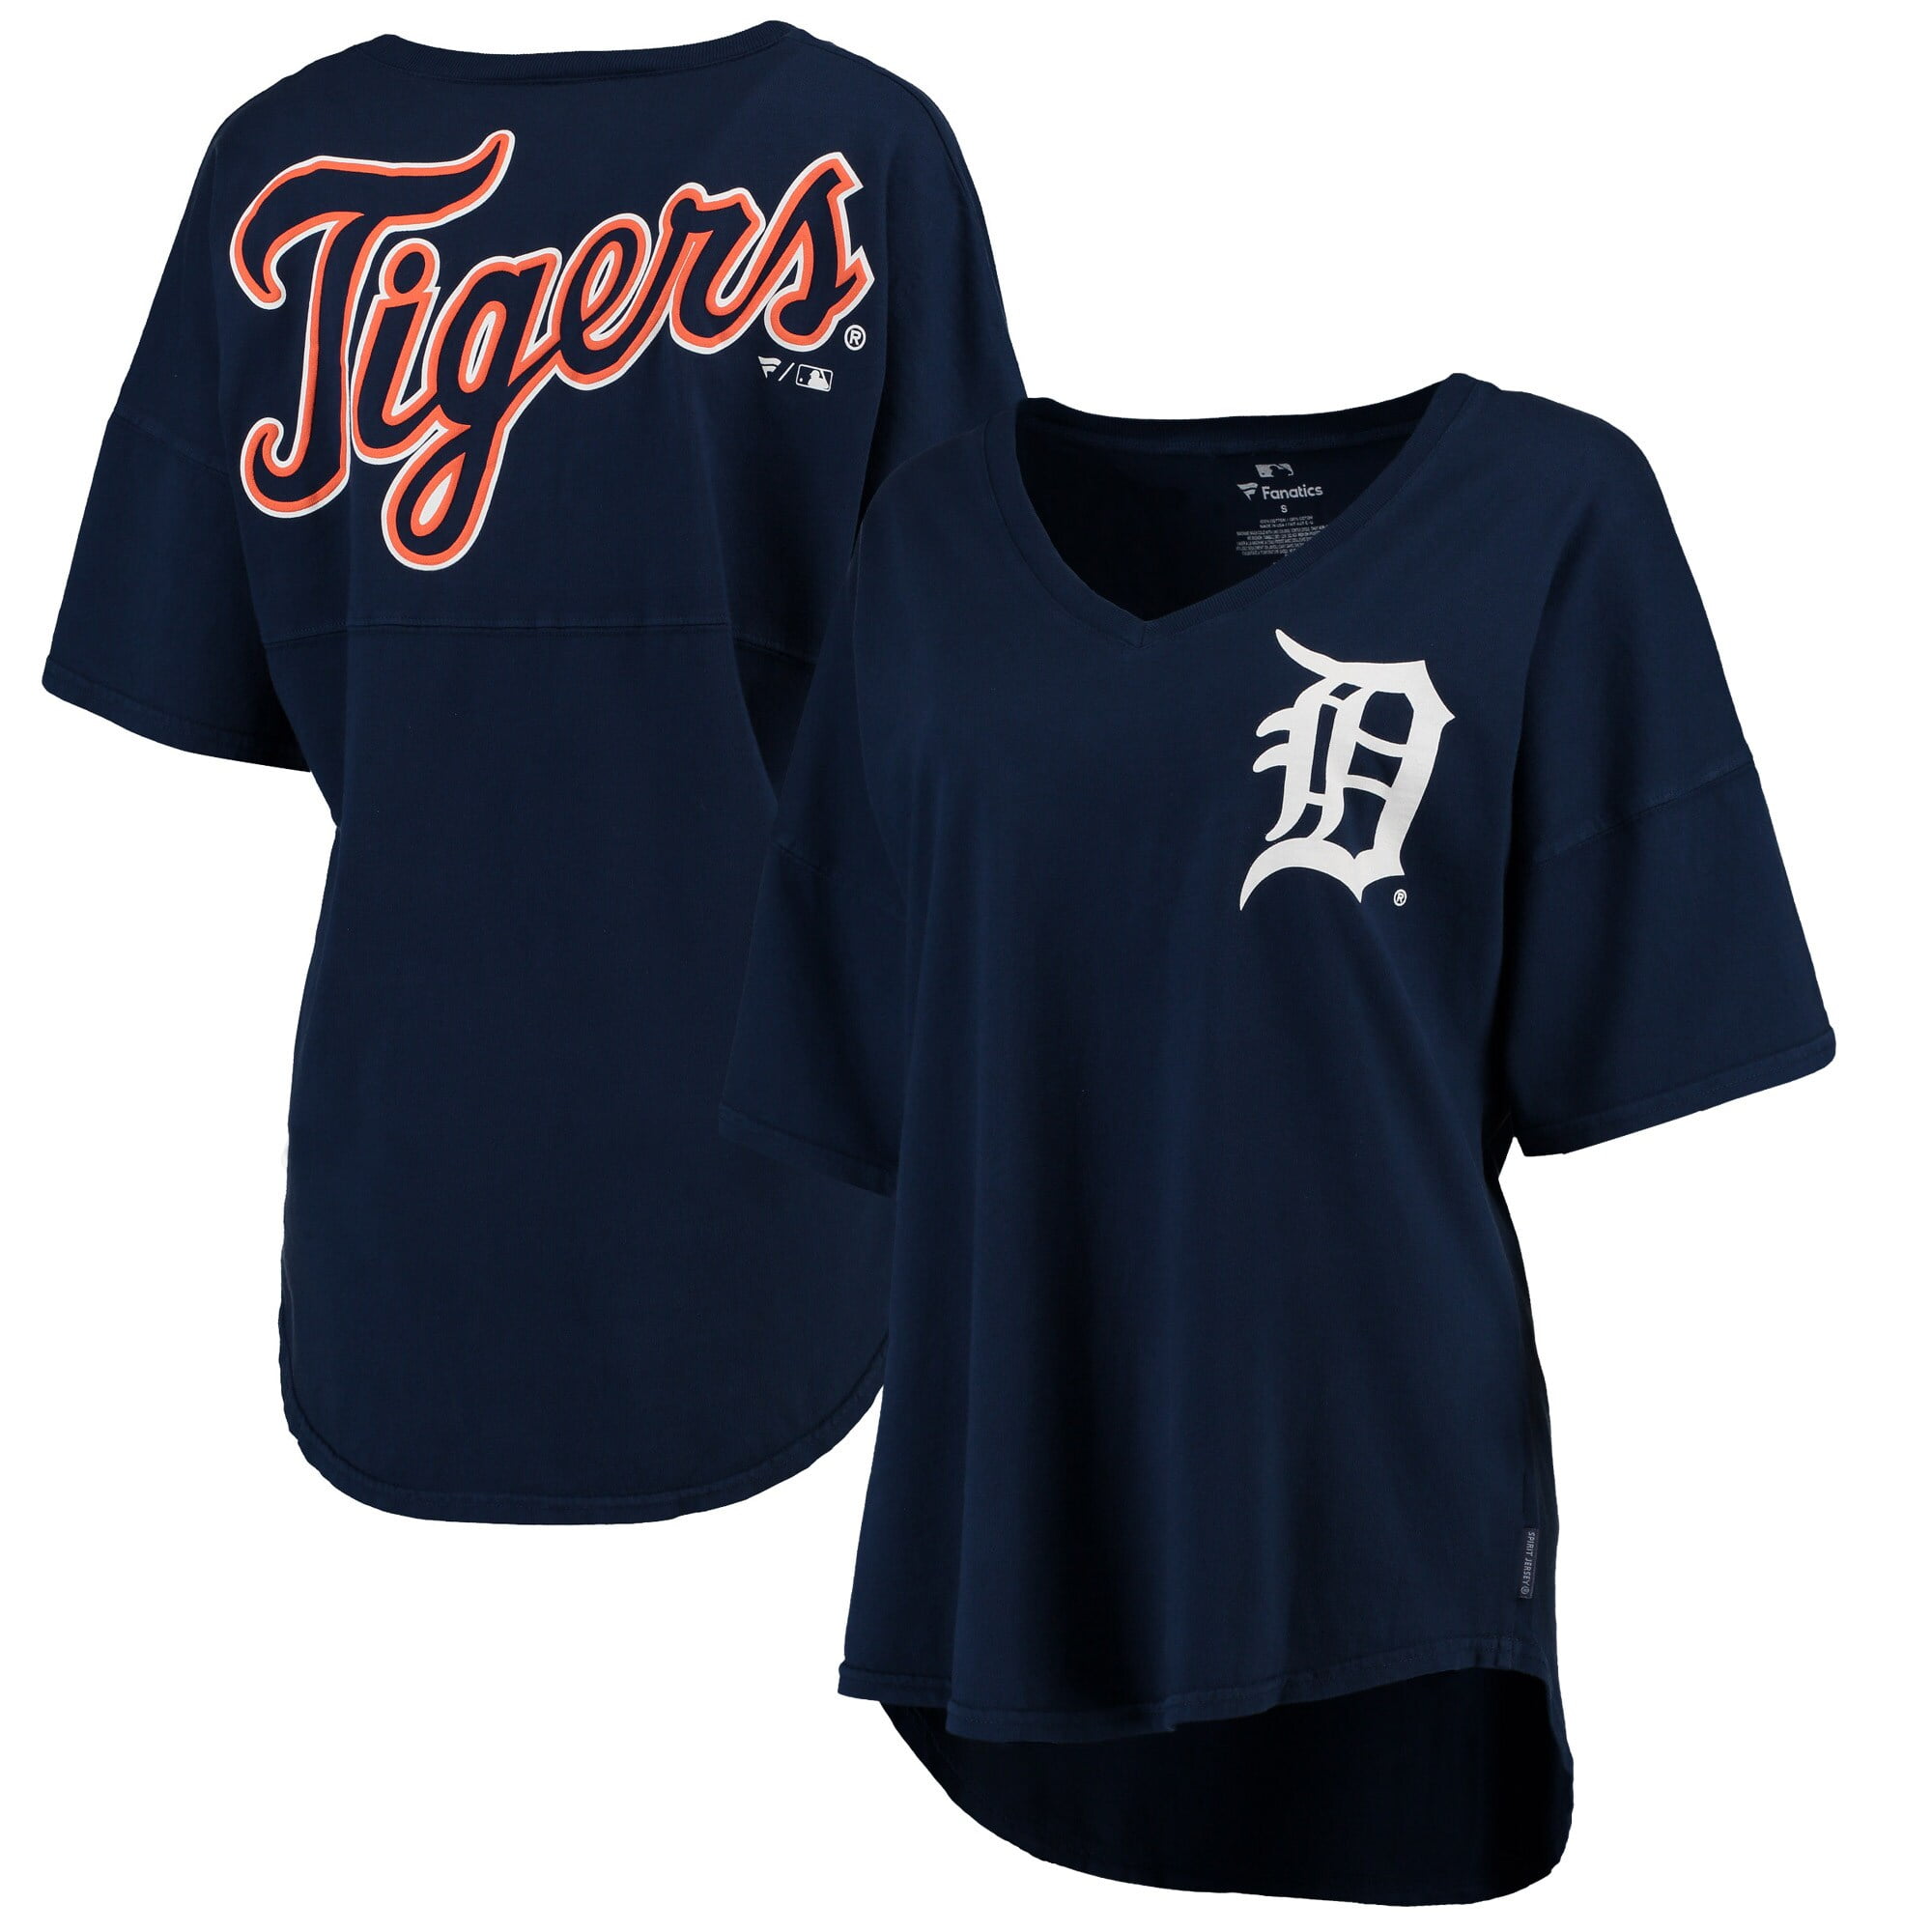 cute detroit tigers women's shirts